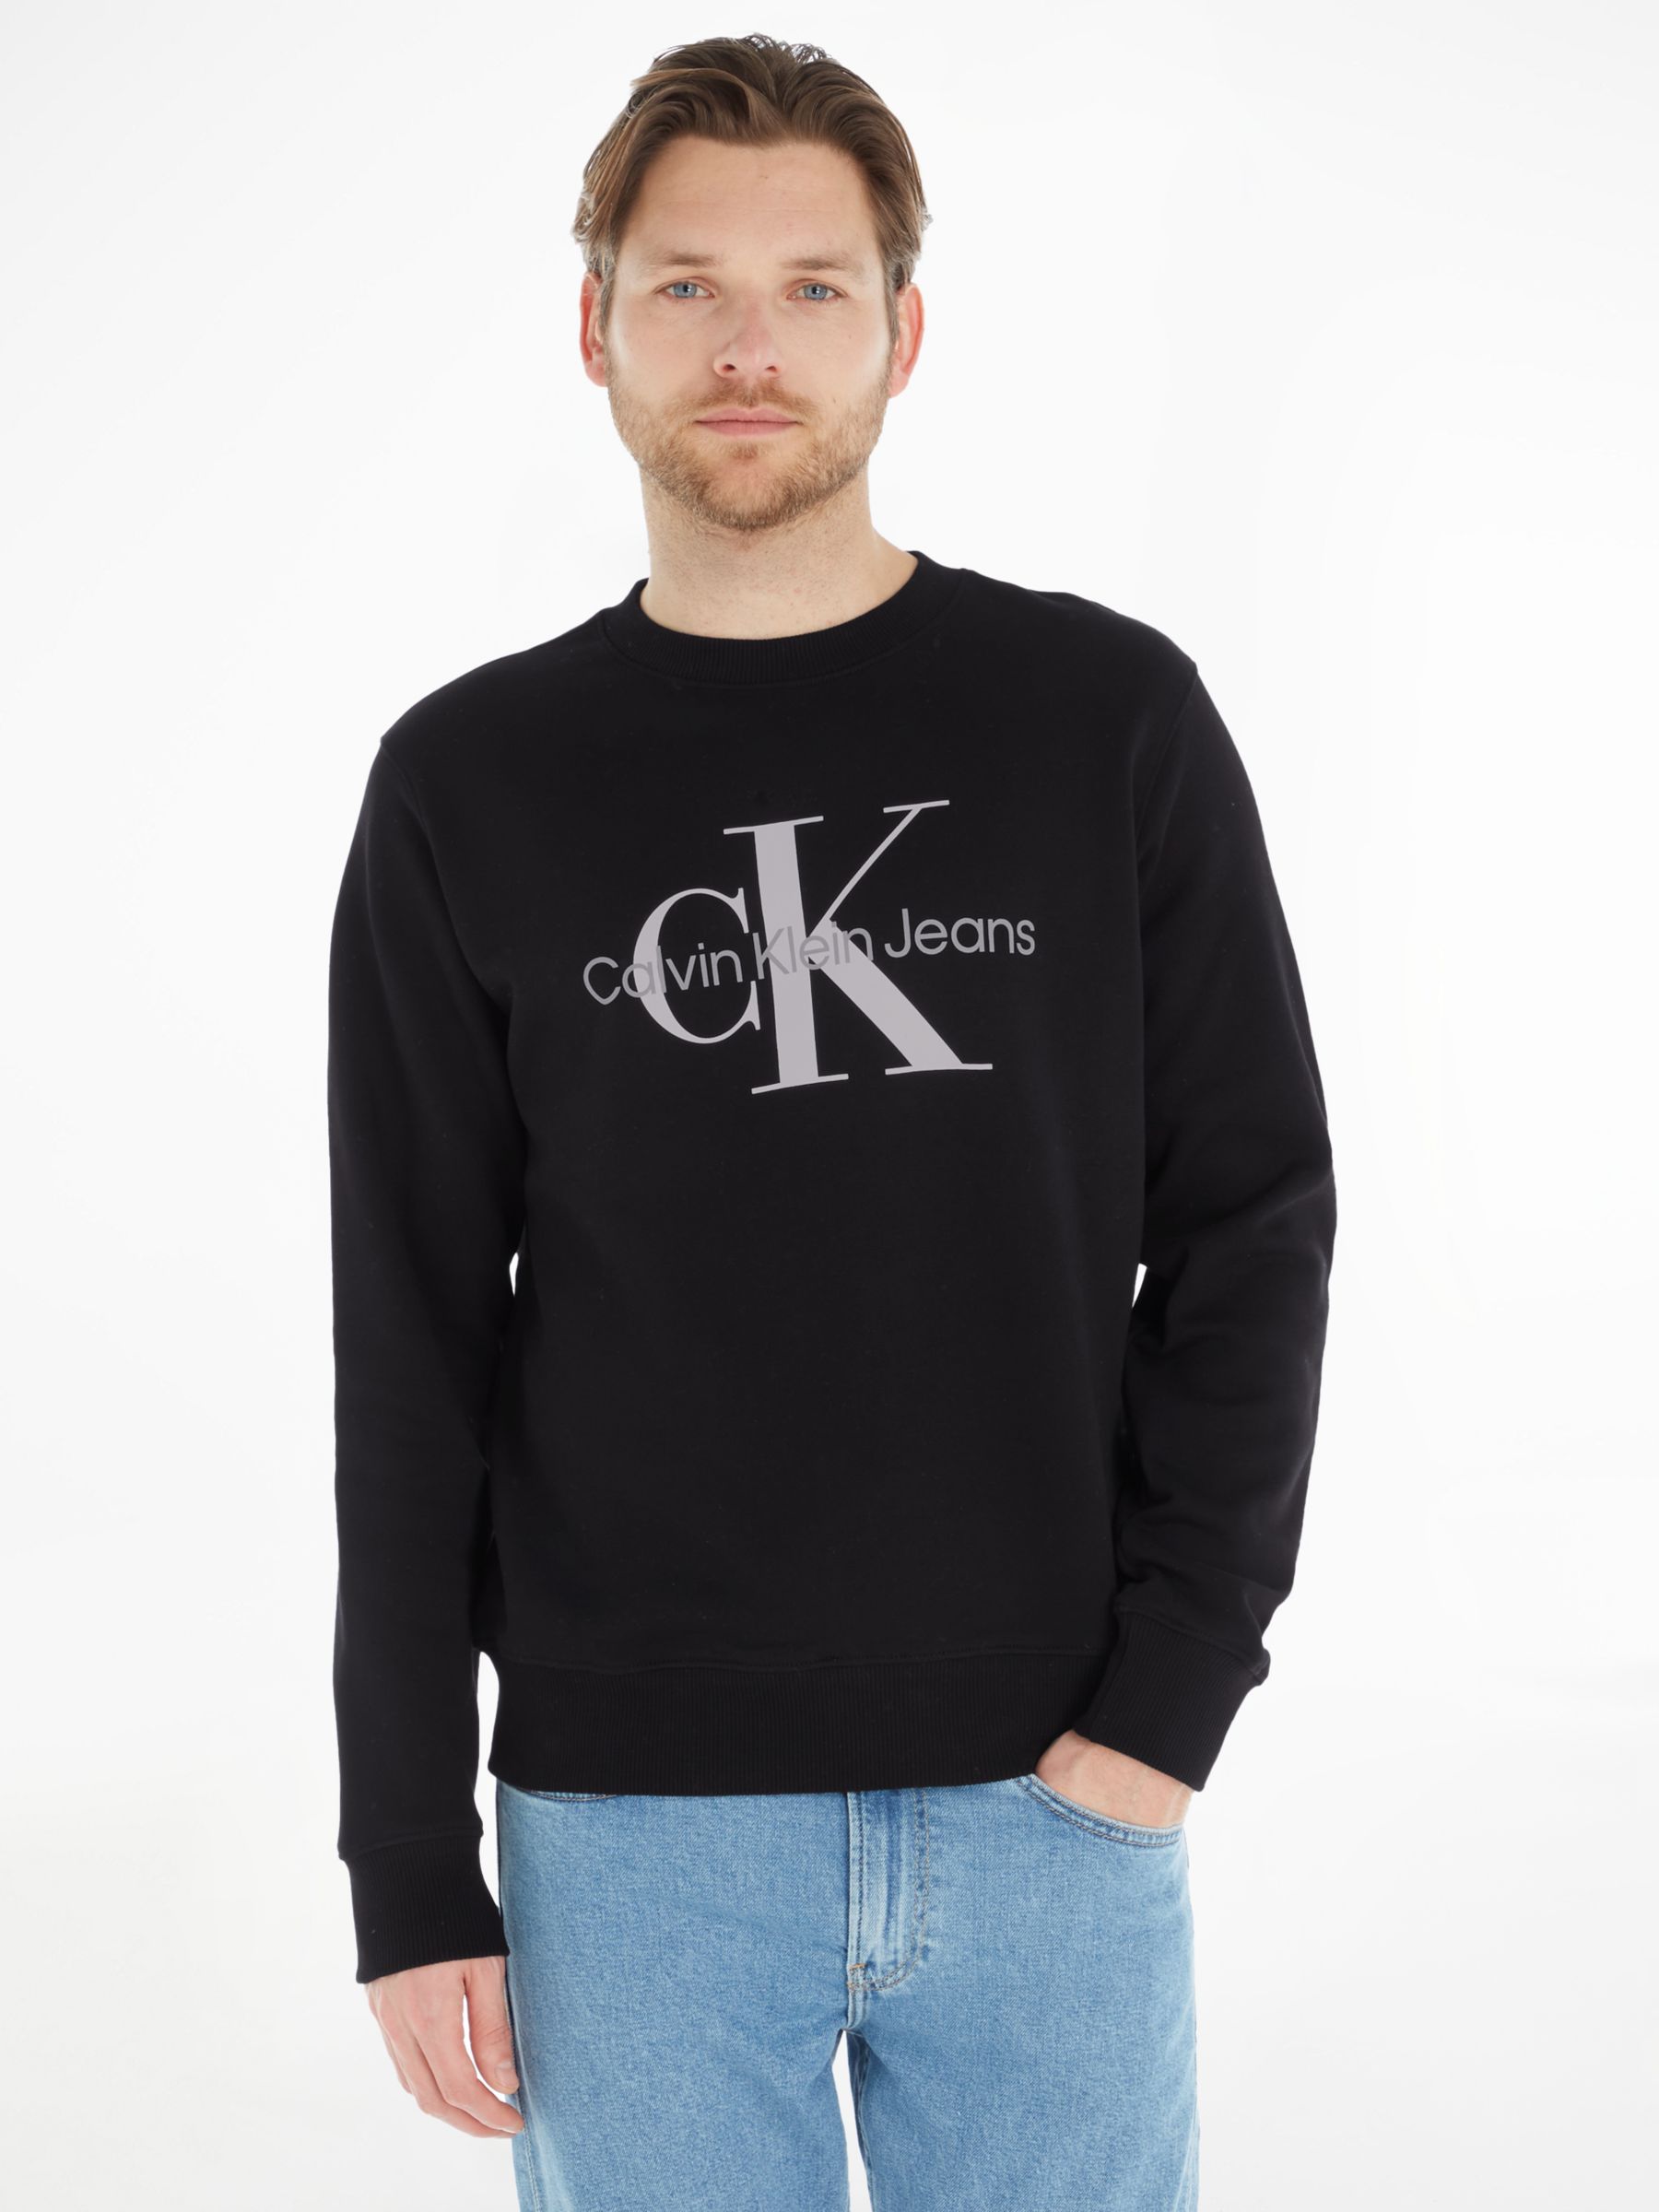 Logo Partners Klein & Lewis John Core Ck Calvin at Black Sweatshirt, Cotton Jeans Monogram